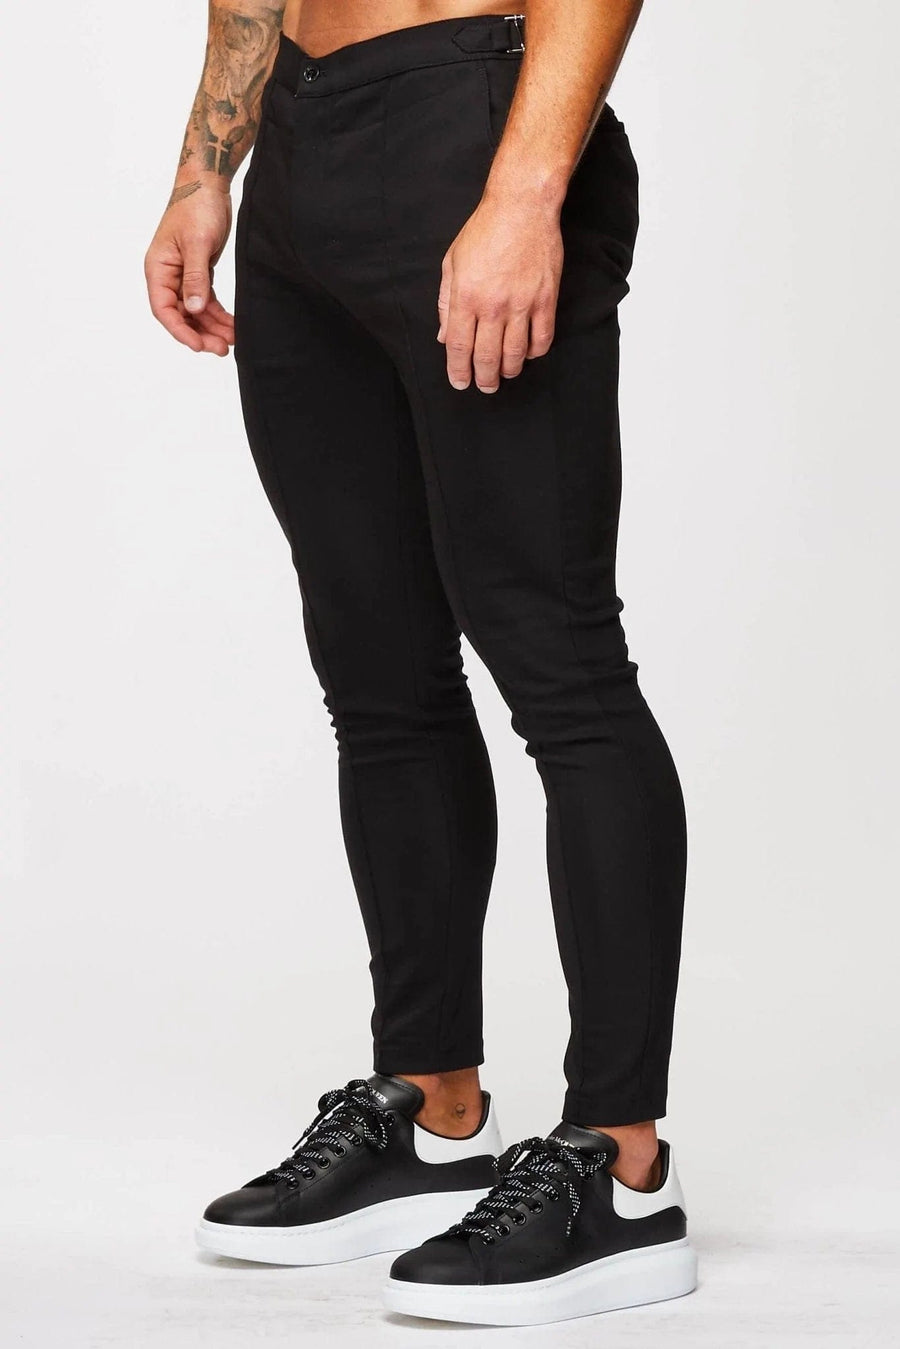 Legend London Trousers PLAIN STRETCH TROUSER W/ SIDE CINCH - BLACK